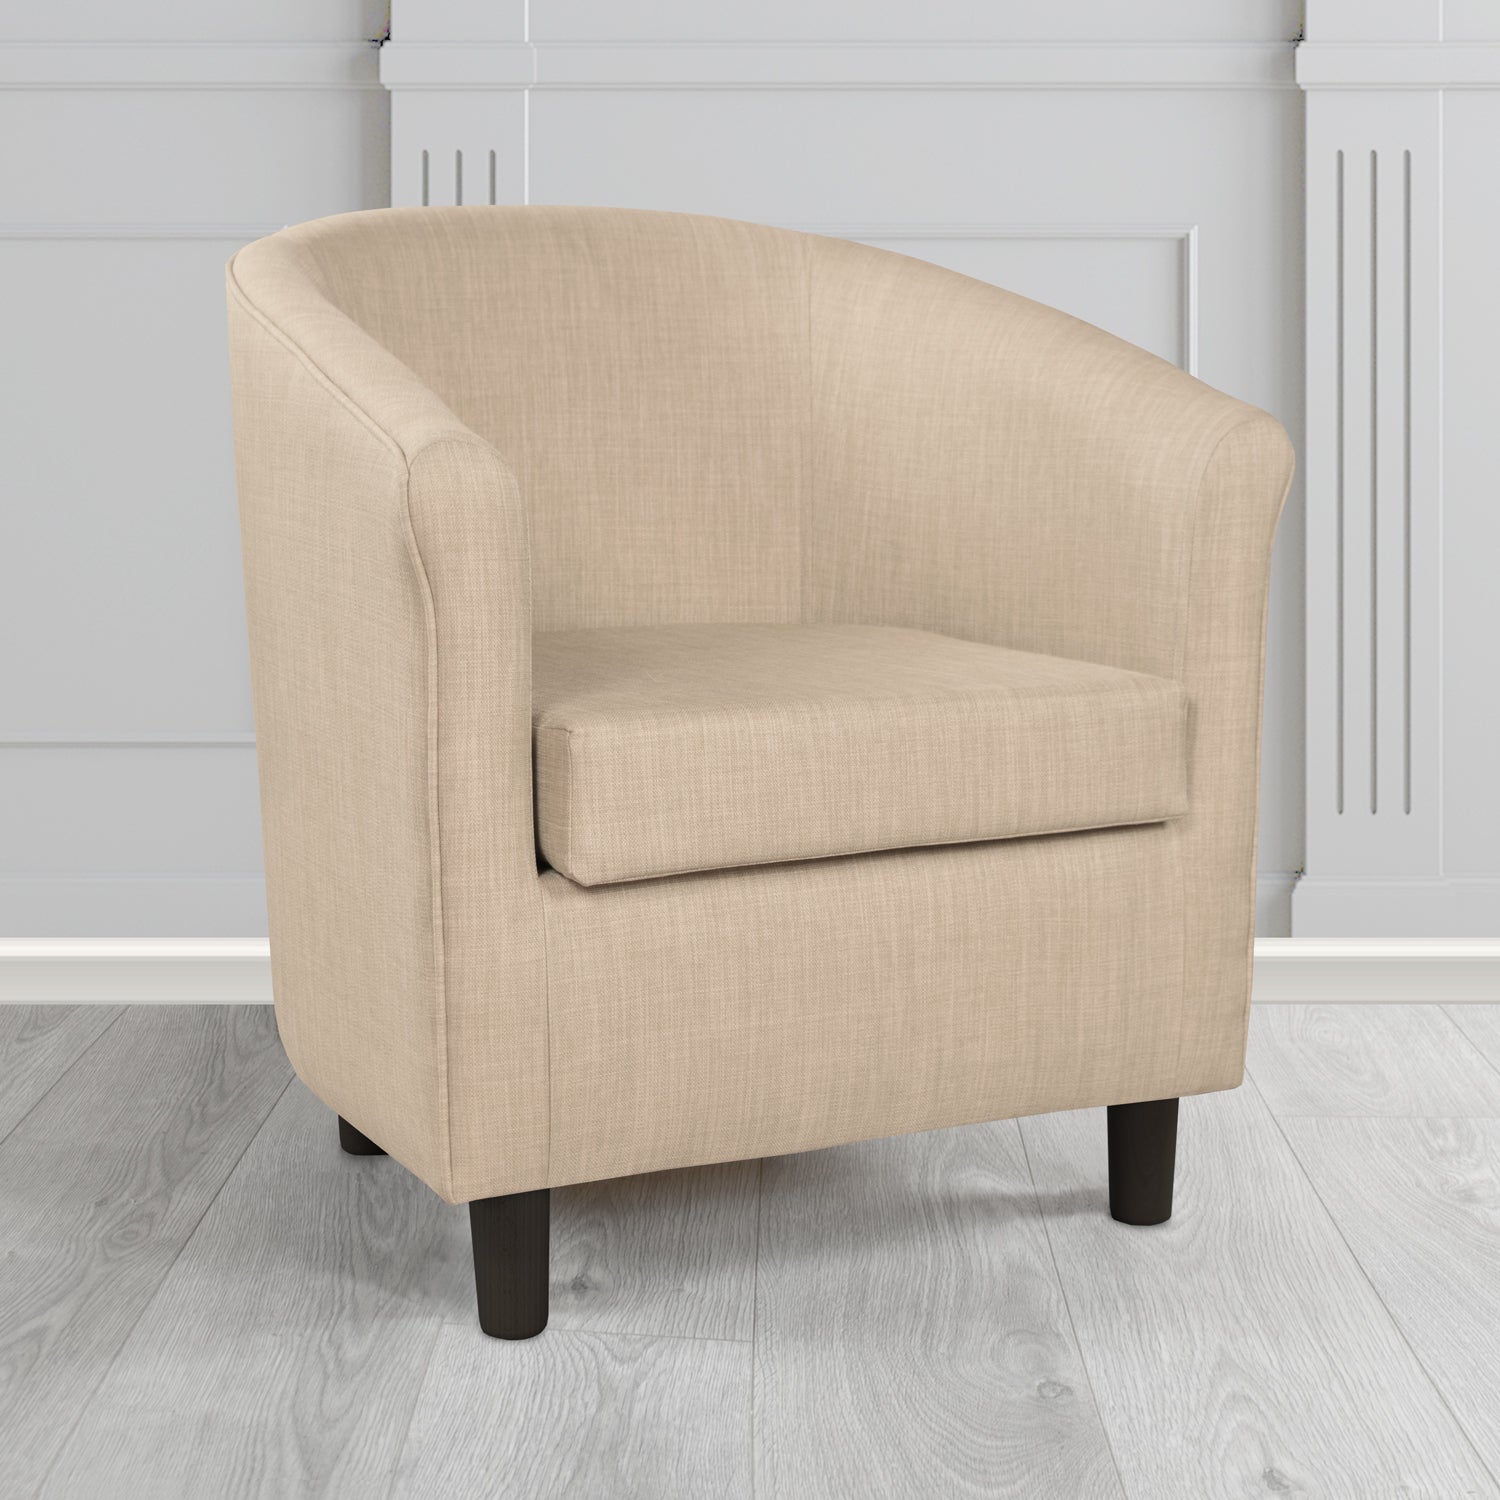 Tuscany Charles Sand Plain Linen Fabric Tub Chair - The Tub Chair Shop